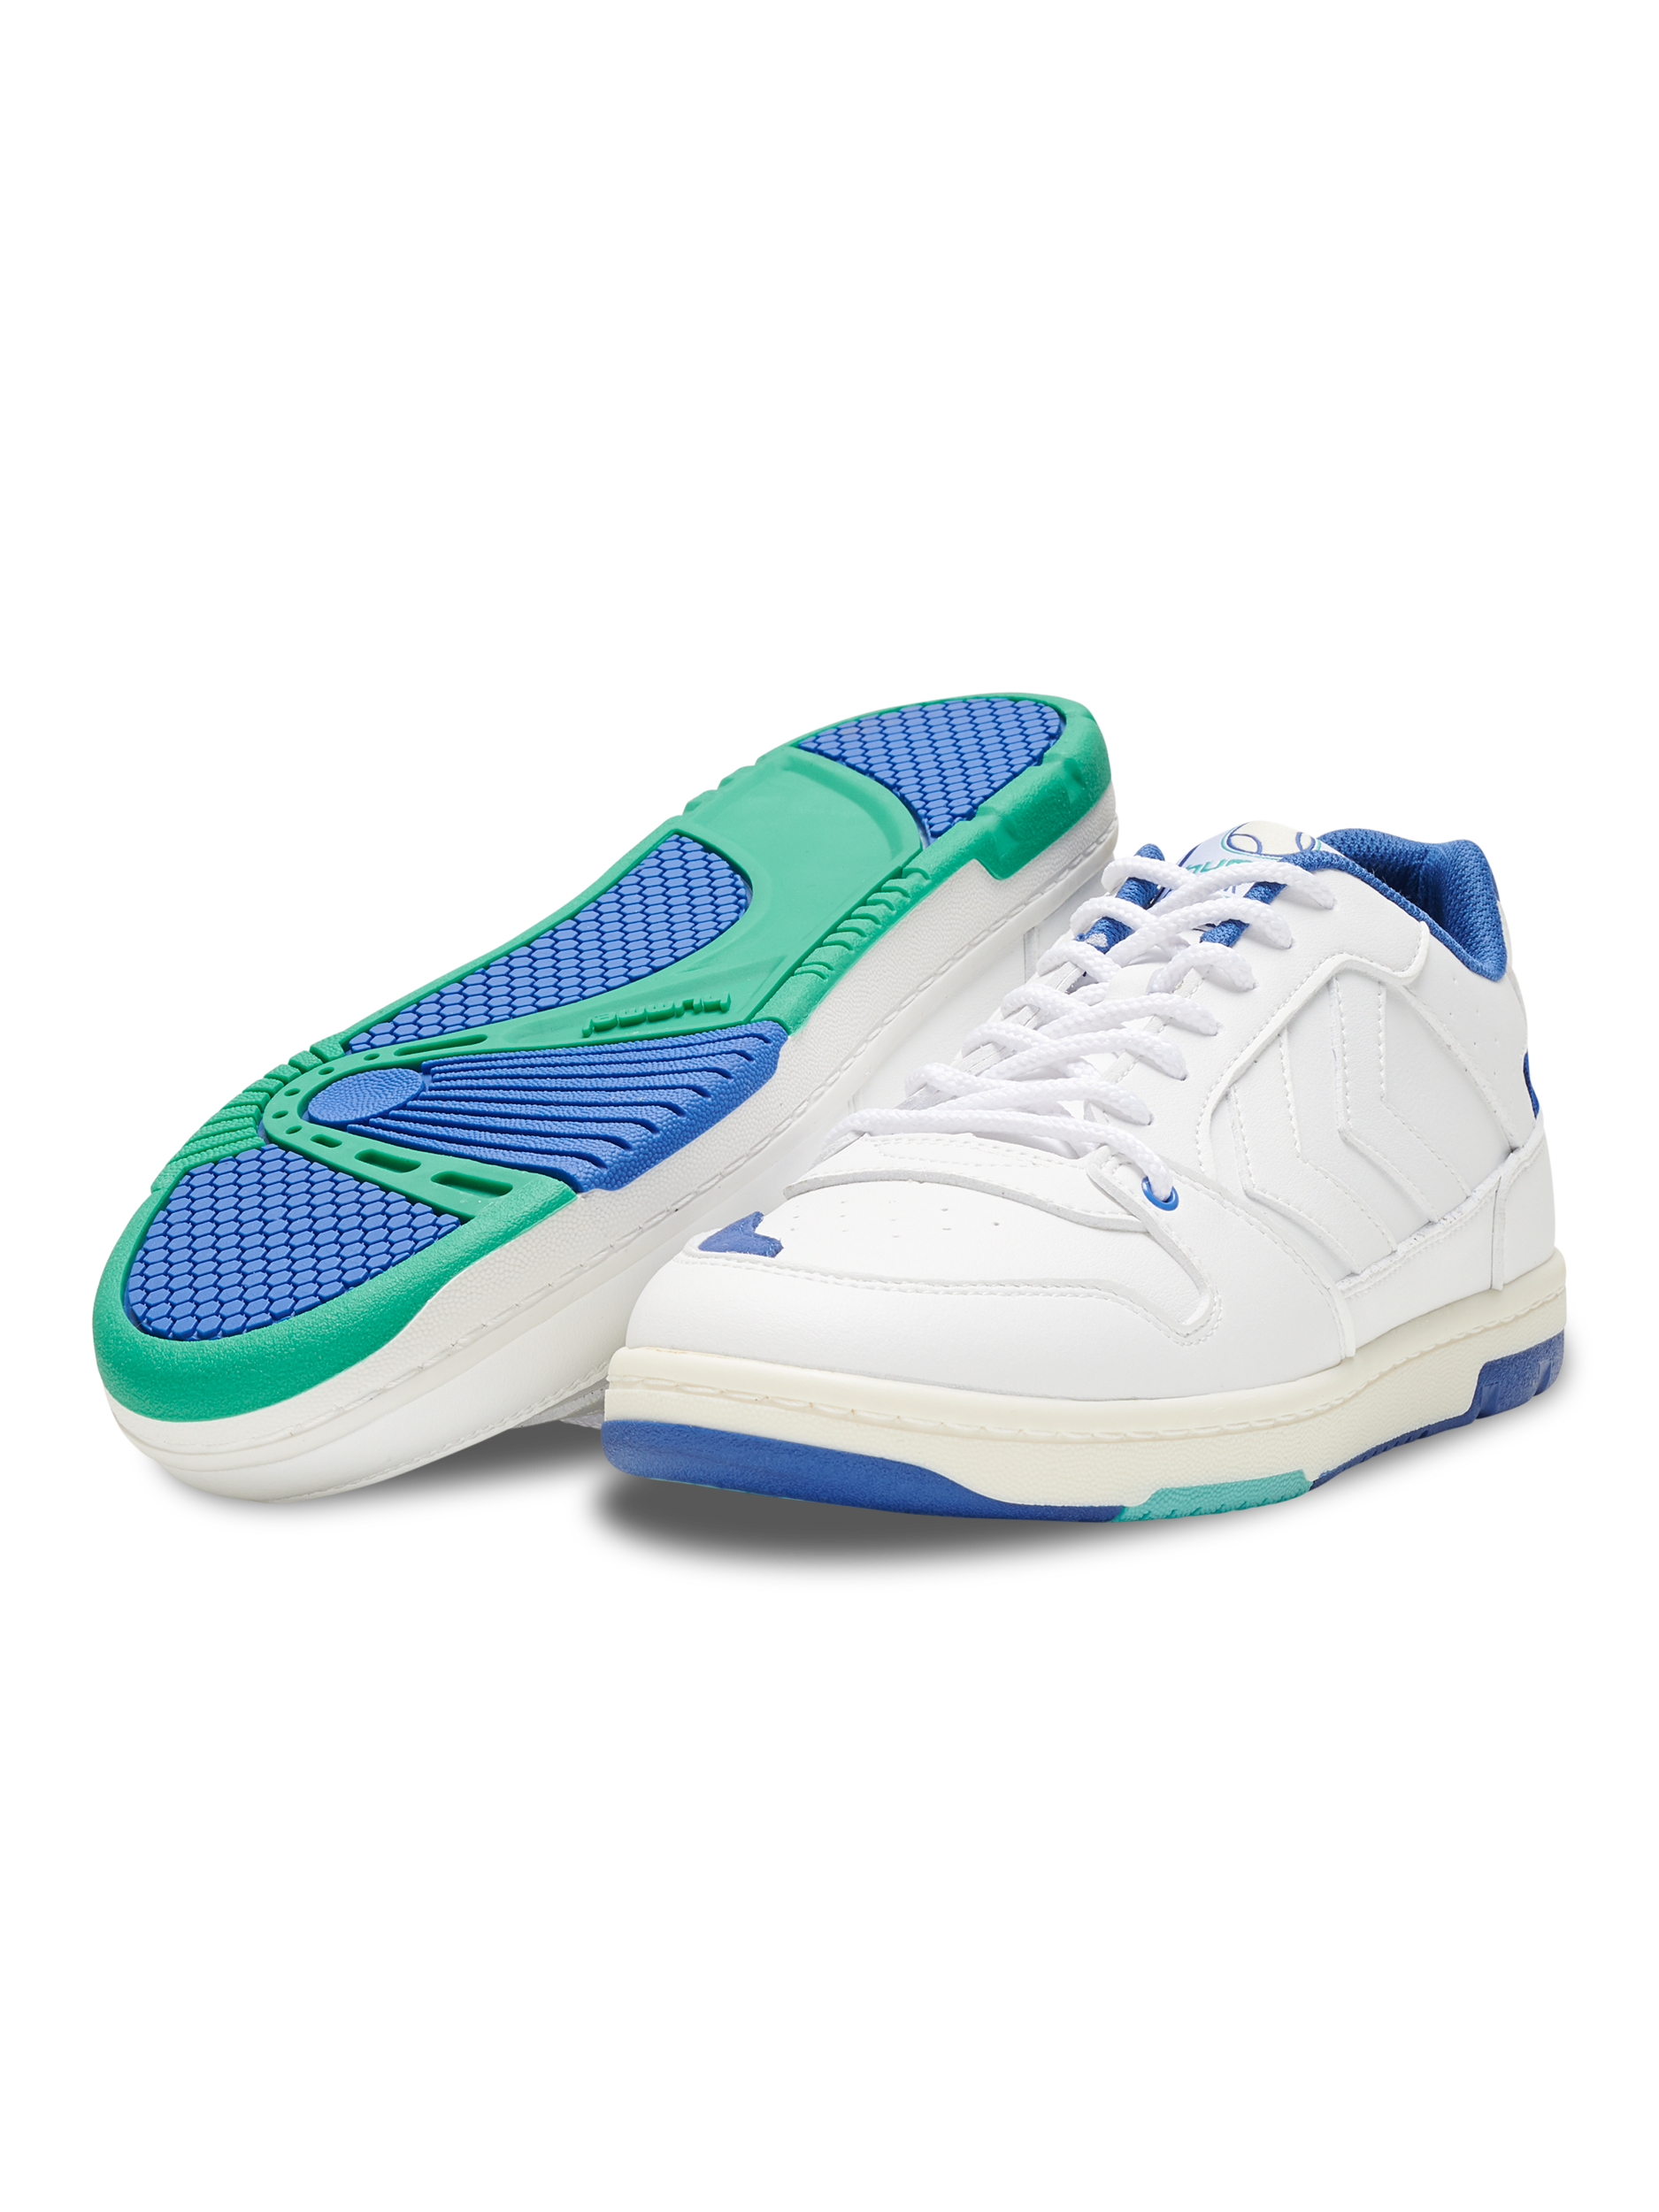 vegan white tennis shoes